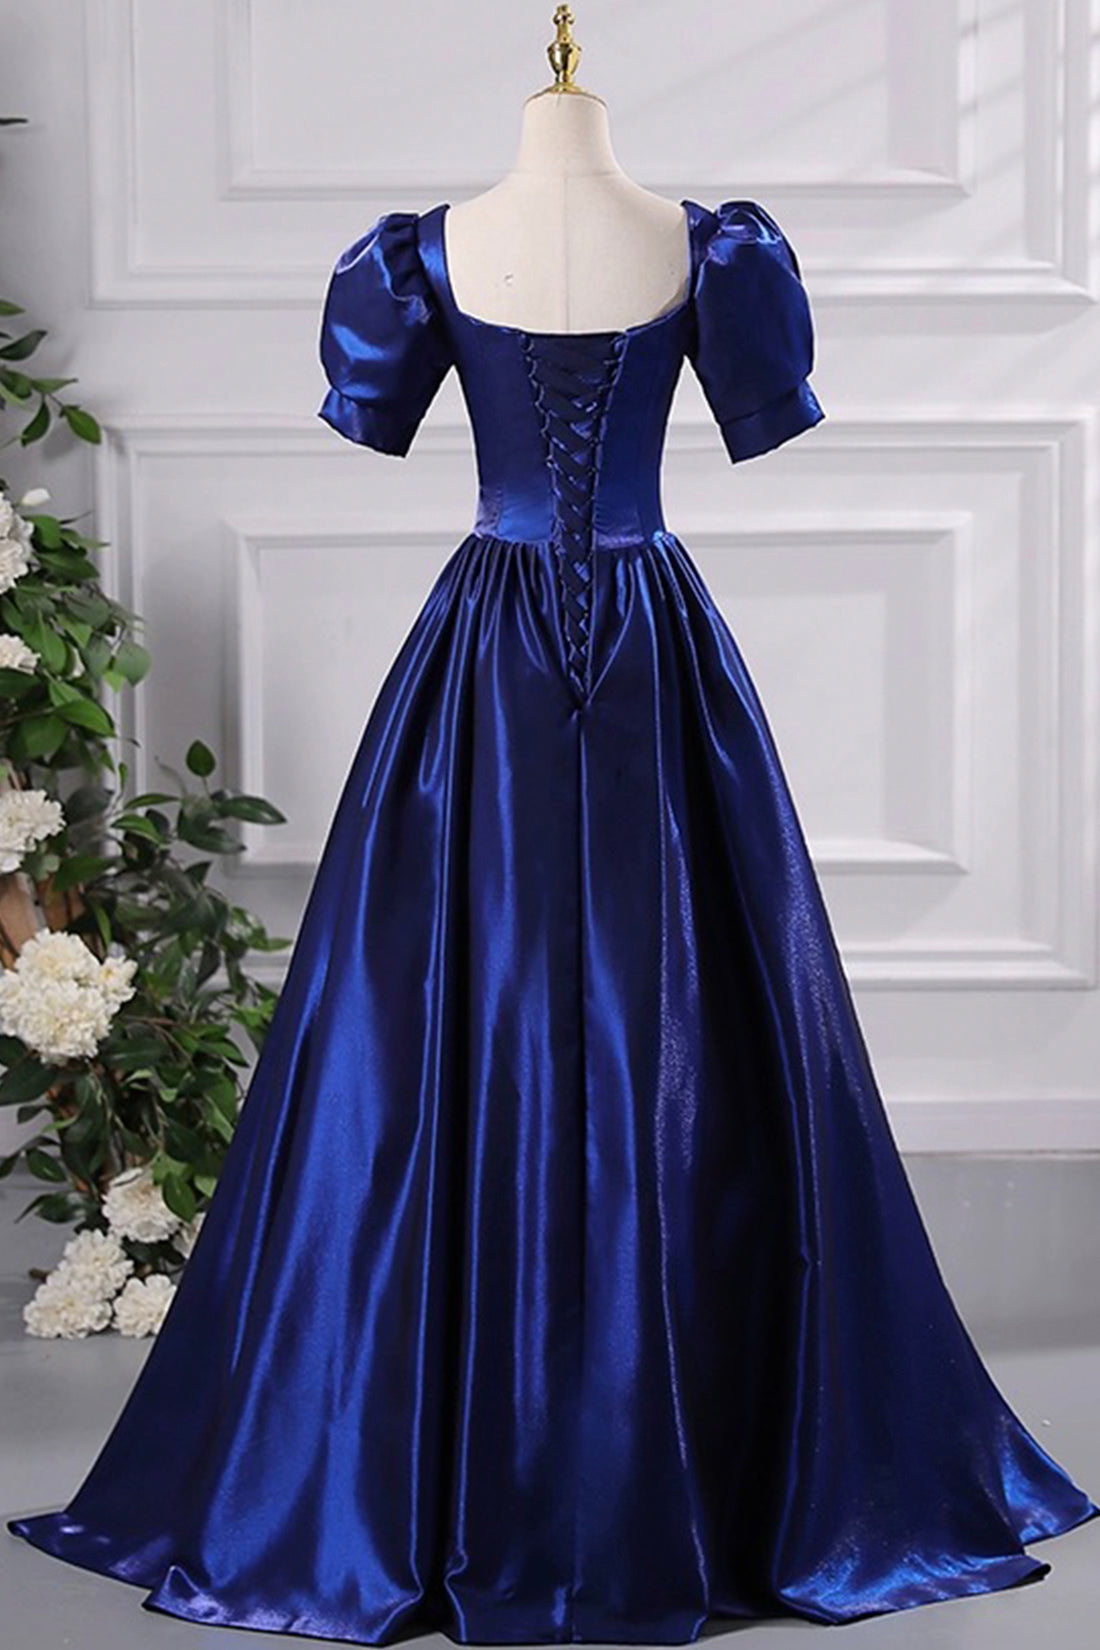 Blue Satin Floor Length Prom Dress, A-Line Short Sleeve Backless Evening Party Dress